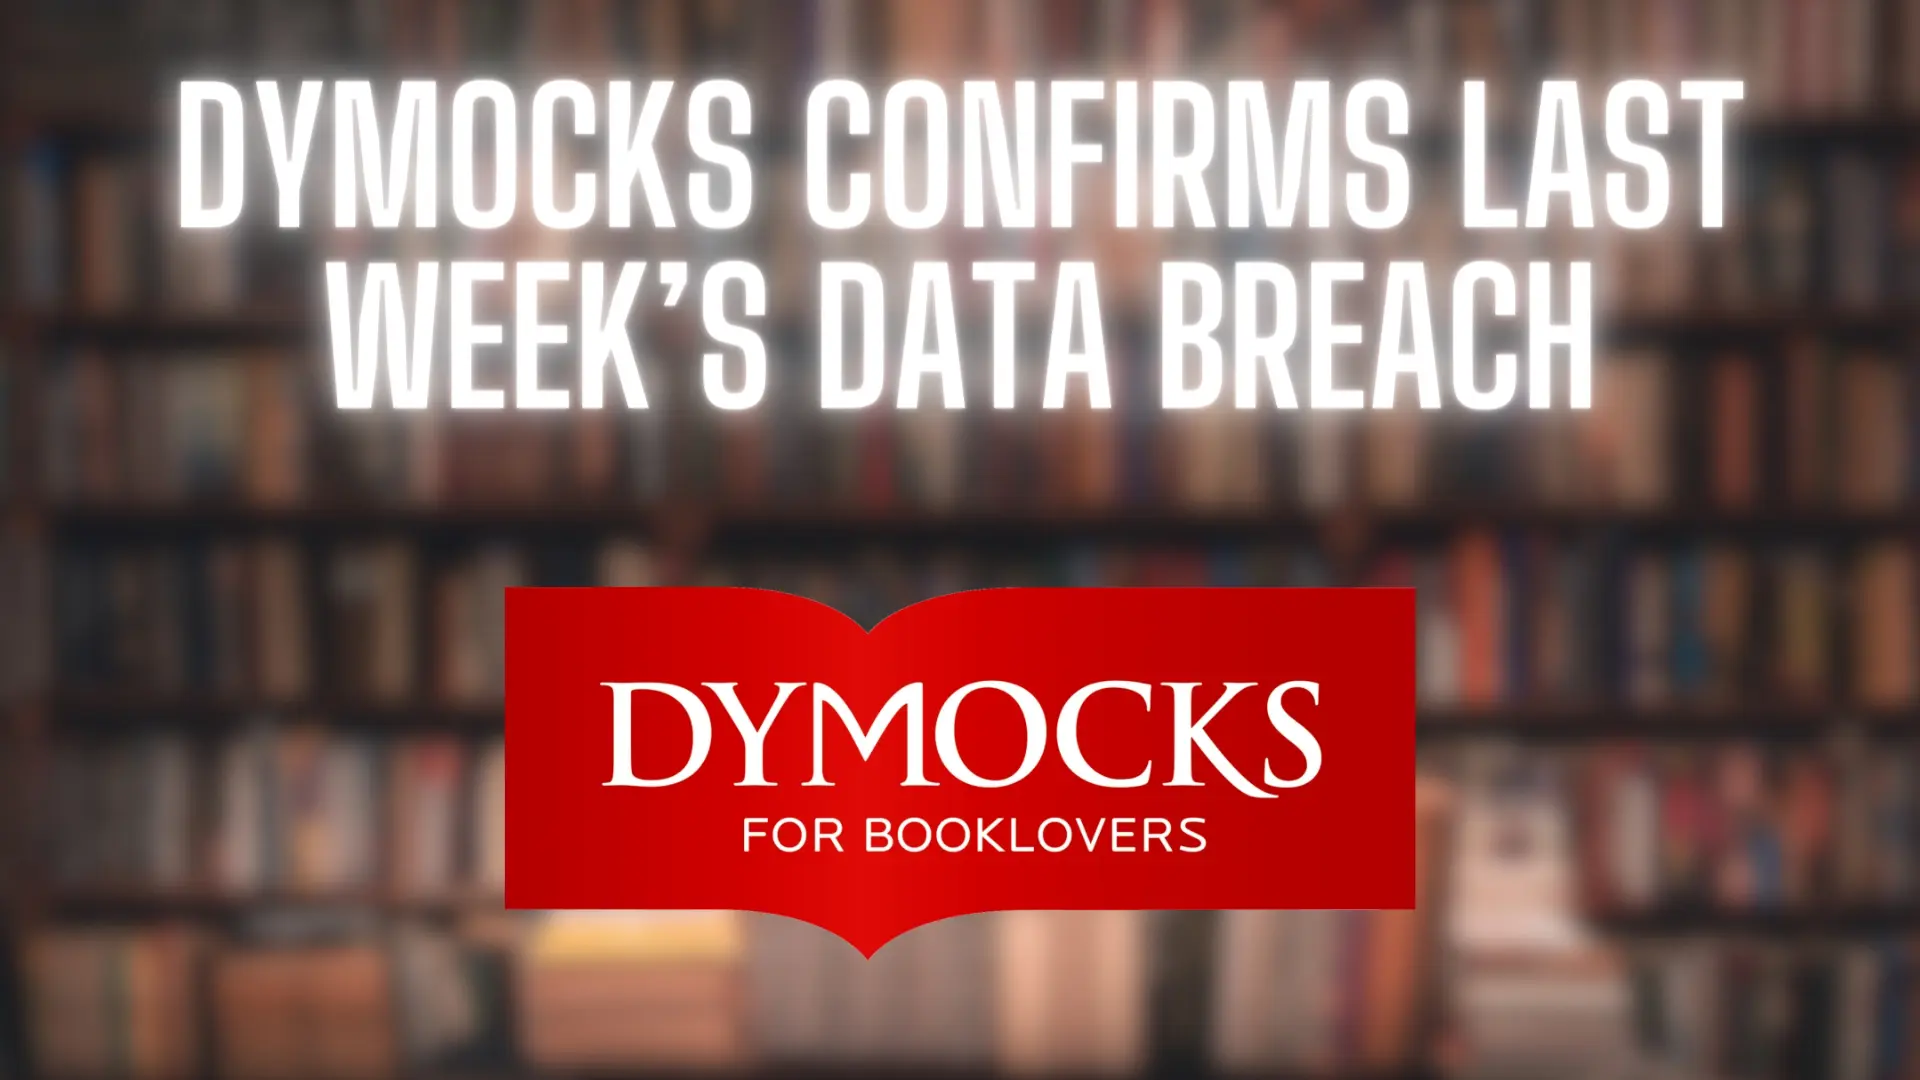 Dymocks Confirms Last Week’s Data Breach